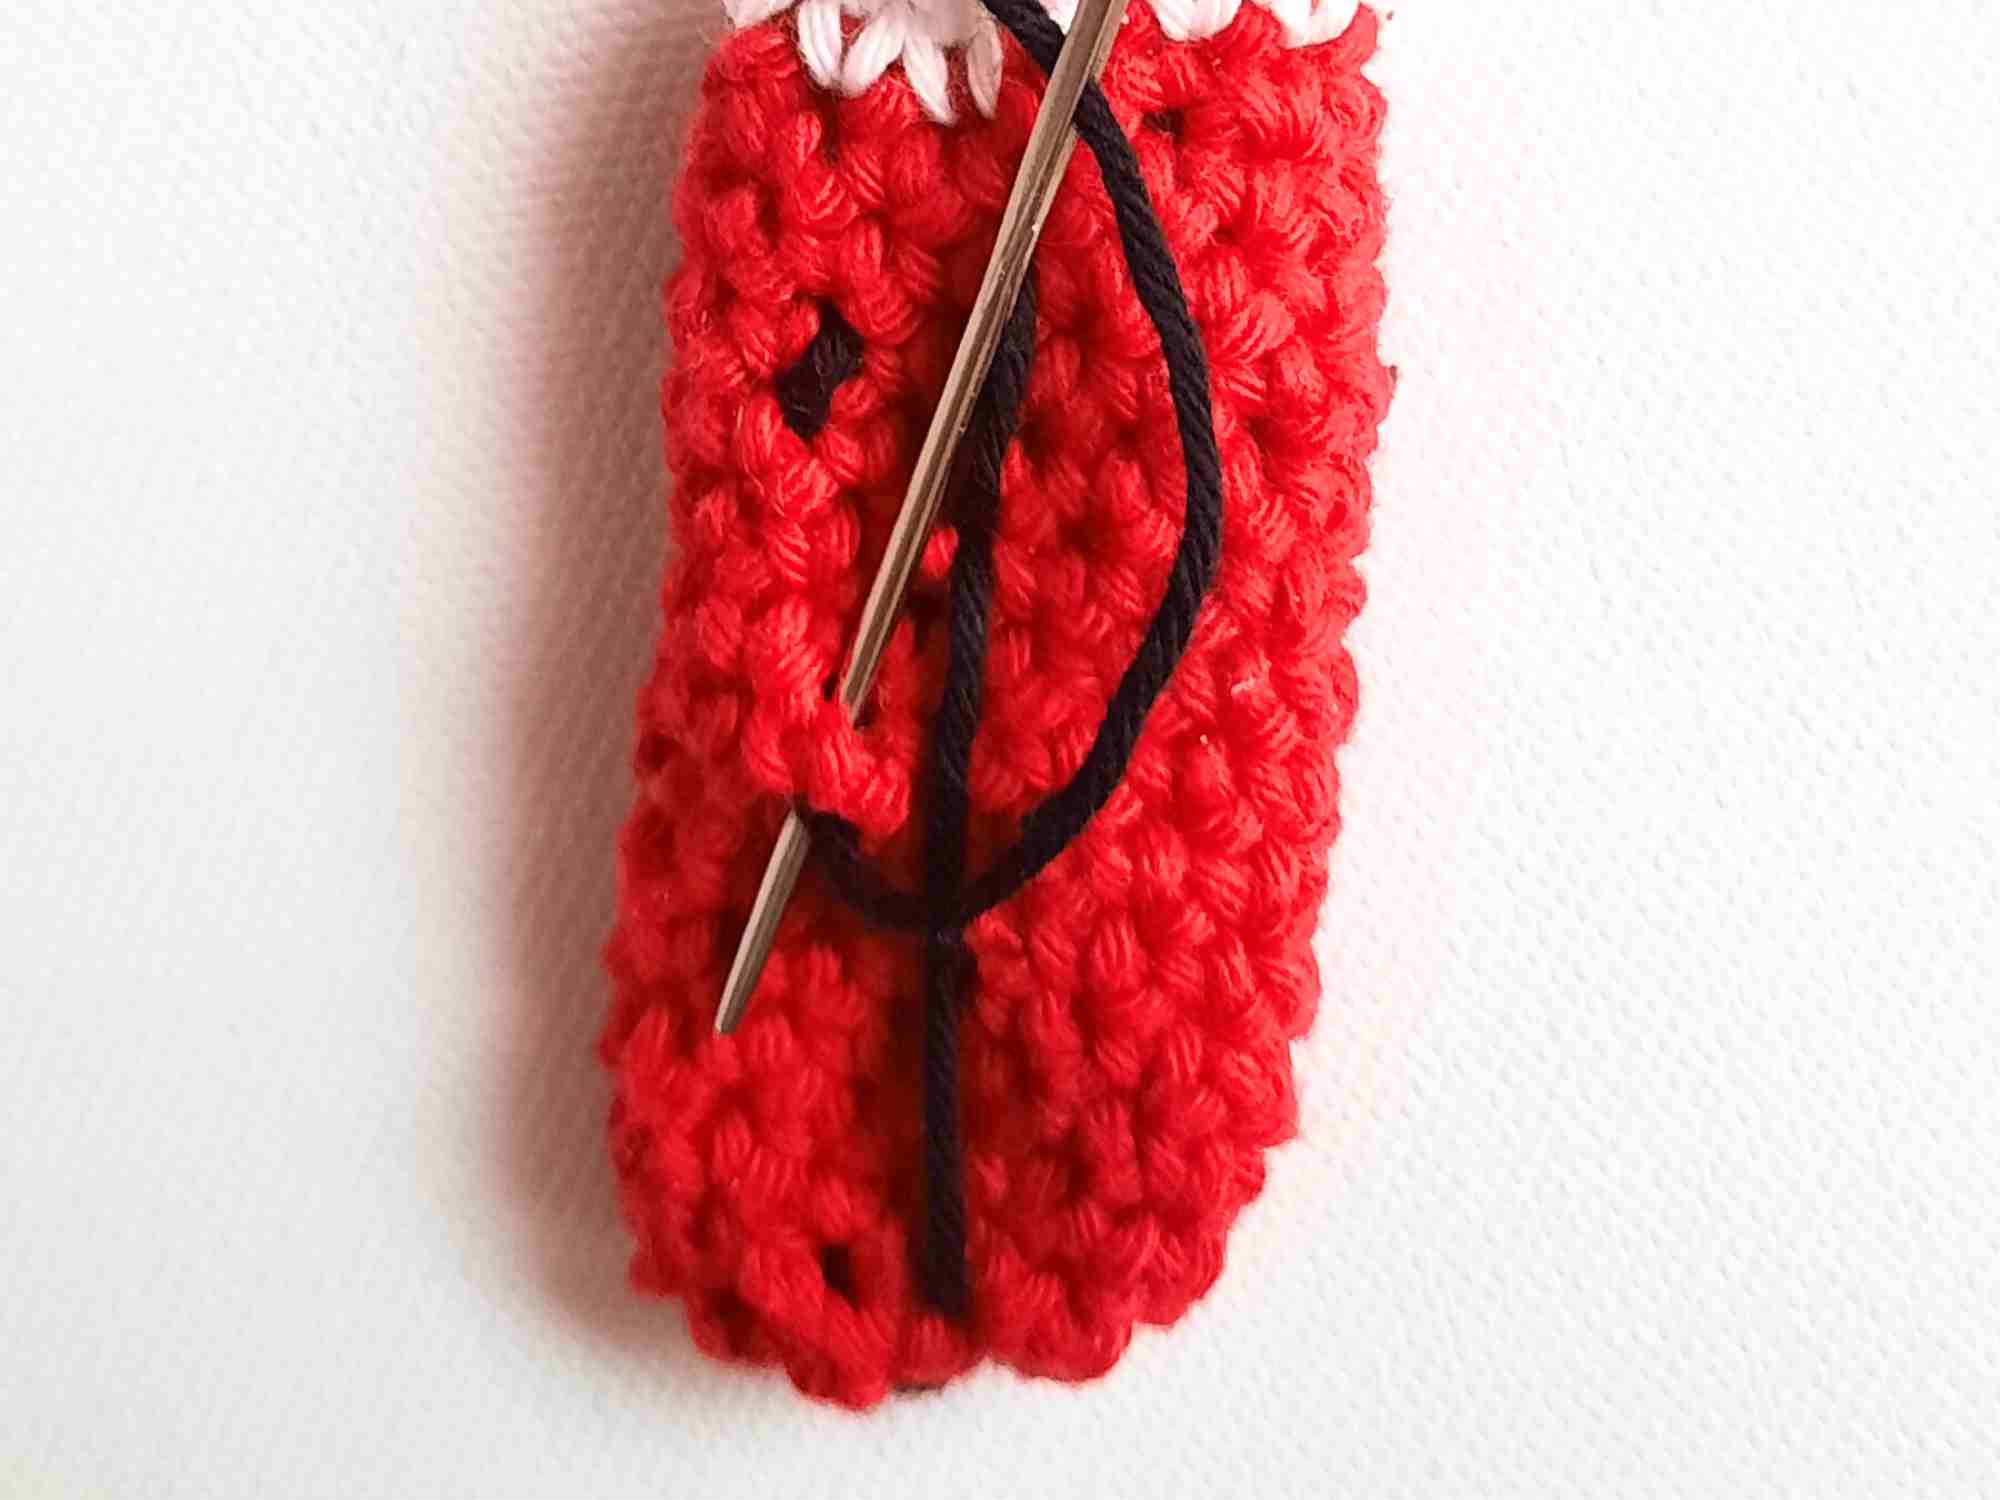  crochet ladybug pattern